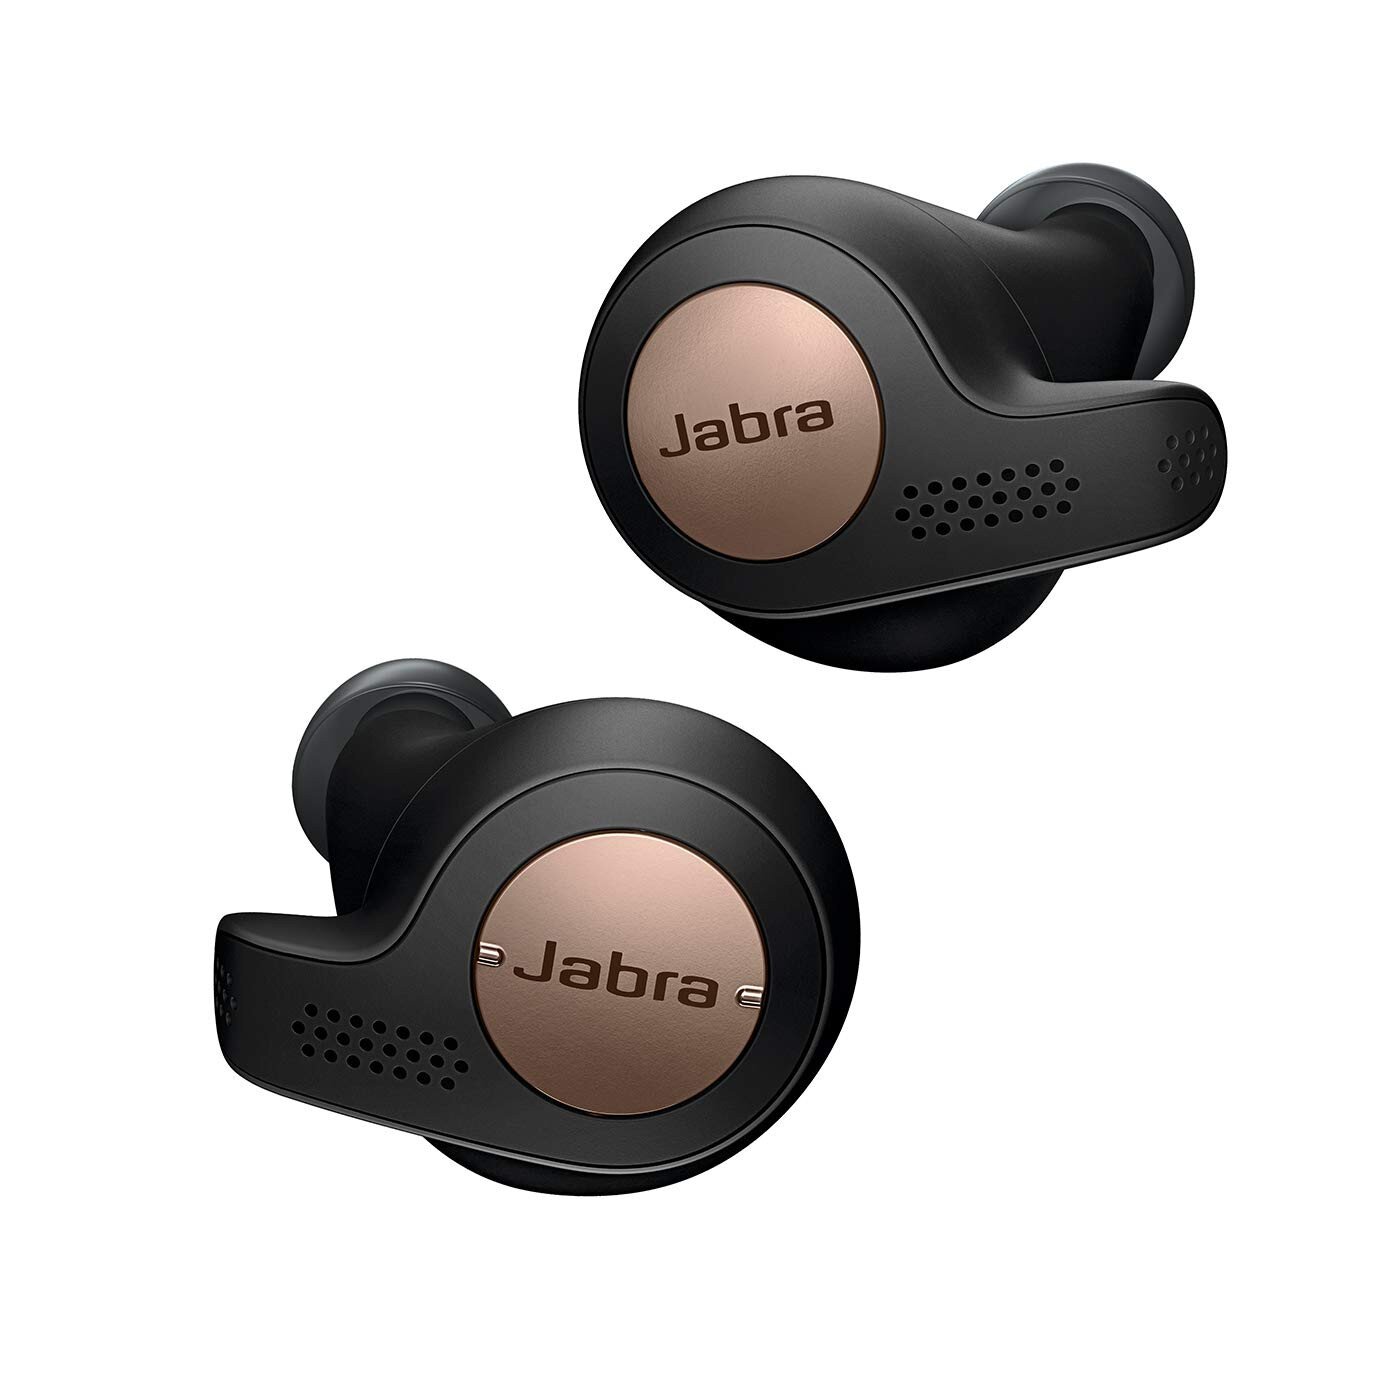 Jabra Elite active 65t copper black earbuds